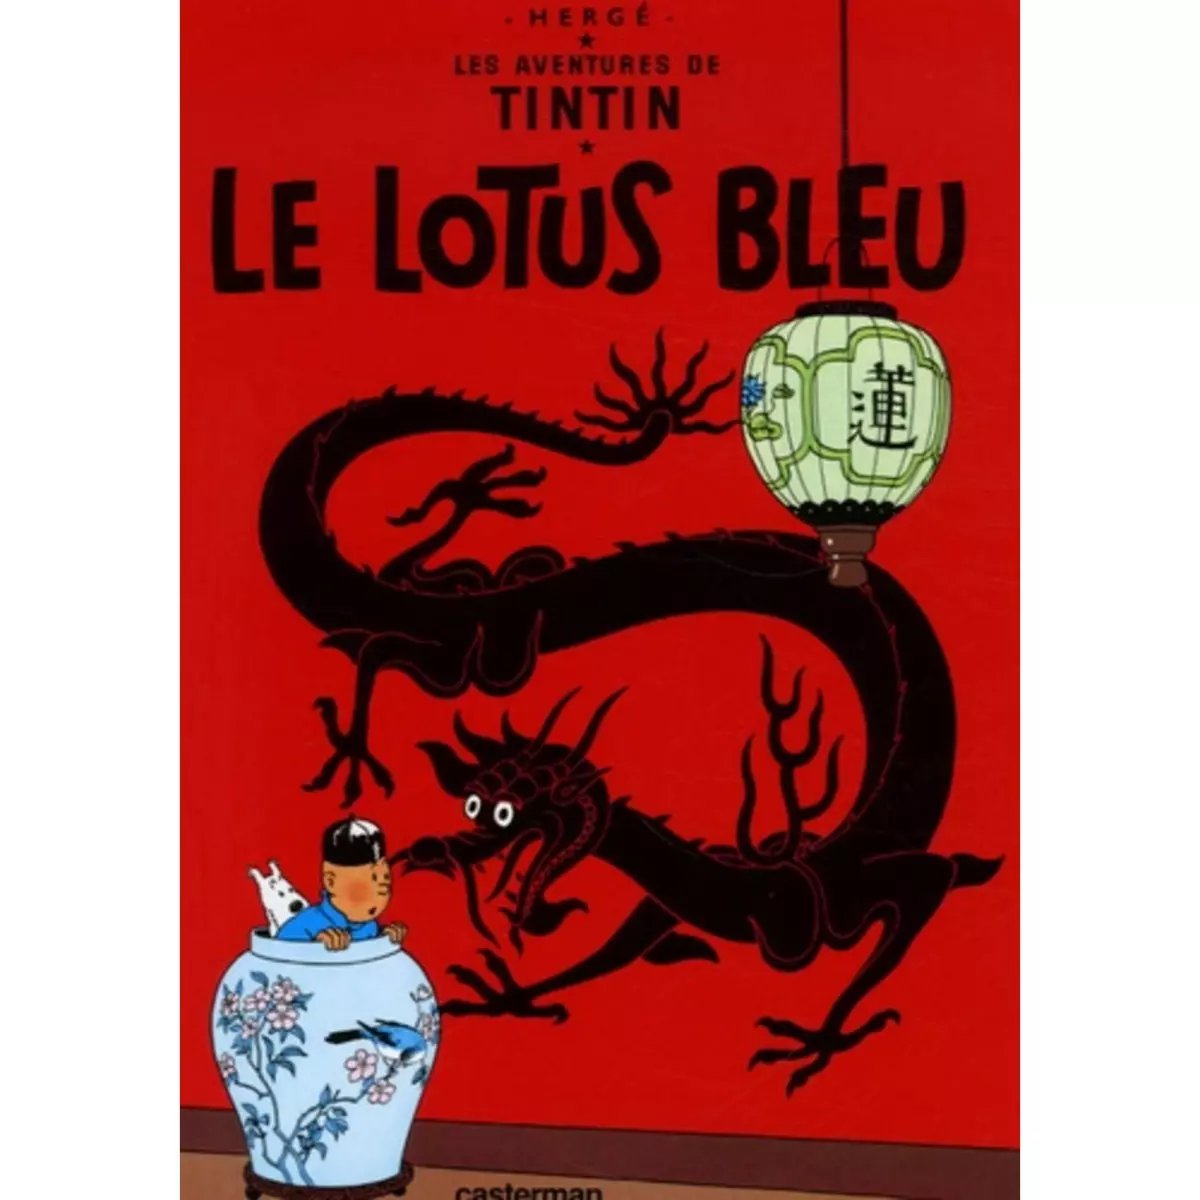  LES AVENTURES DE TINTIN TOME 5 : LE LOTUS BLEU. MINI-ALBUM, Hergé